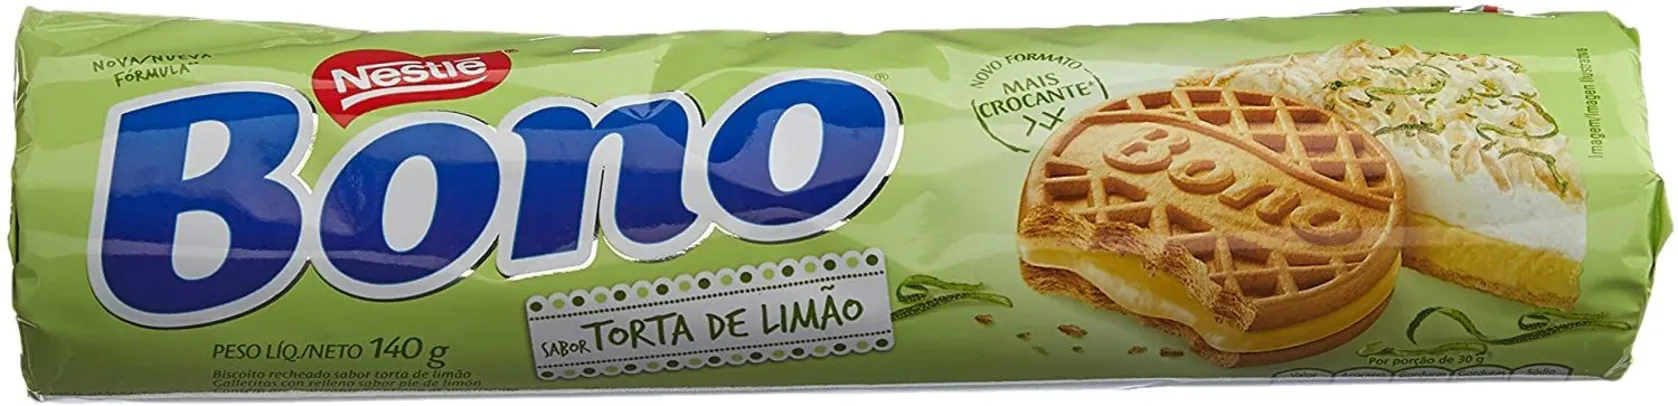 Biscoito/Bolacha, Torta de Limão, Bono, 140g R$1,37